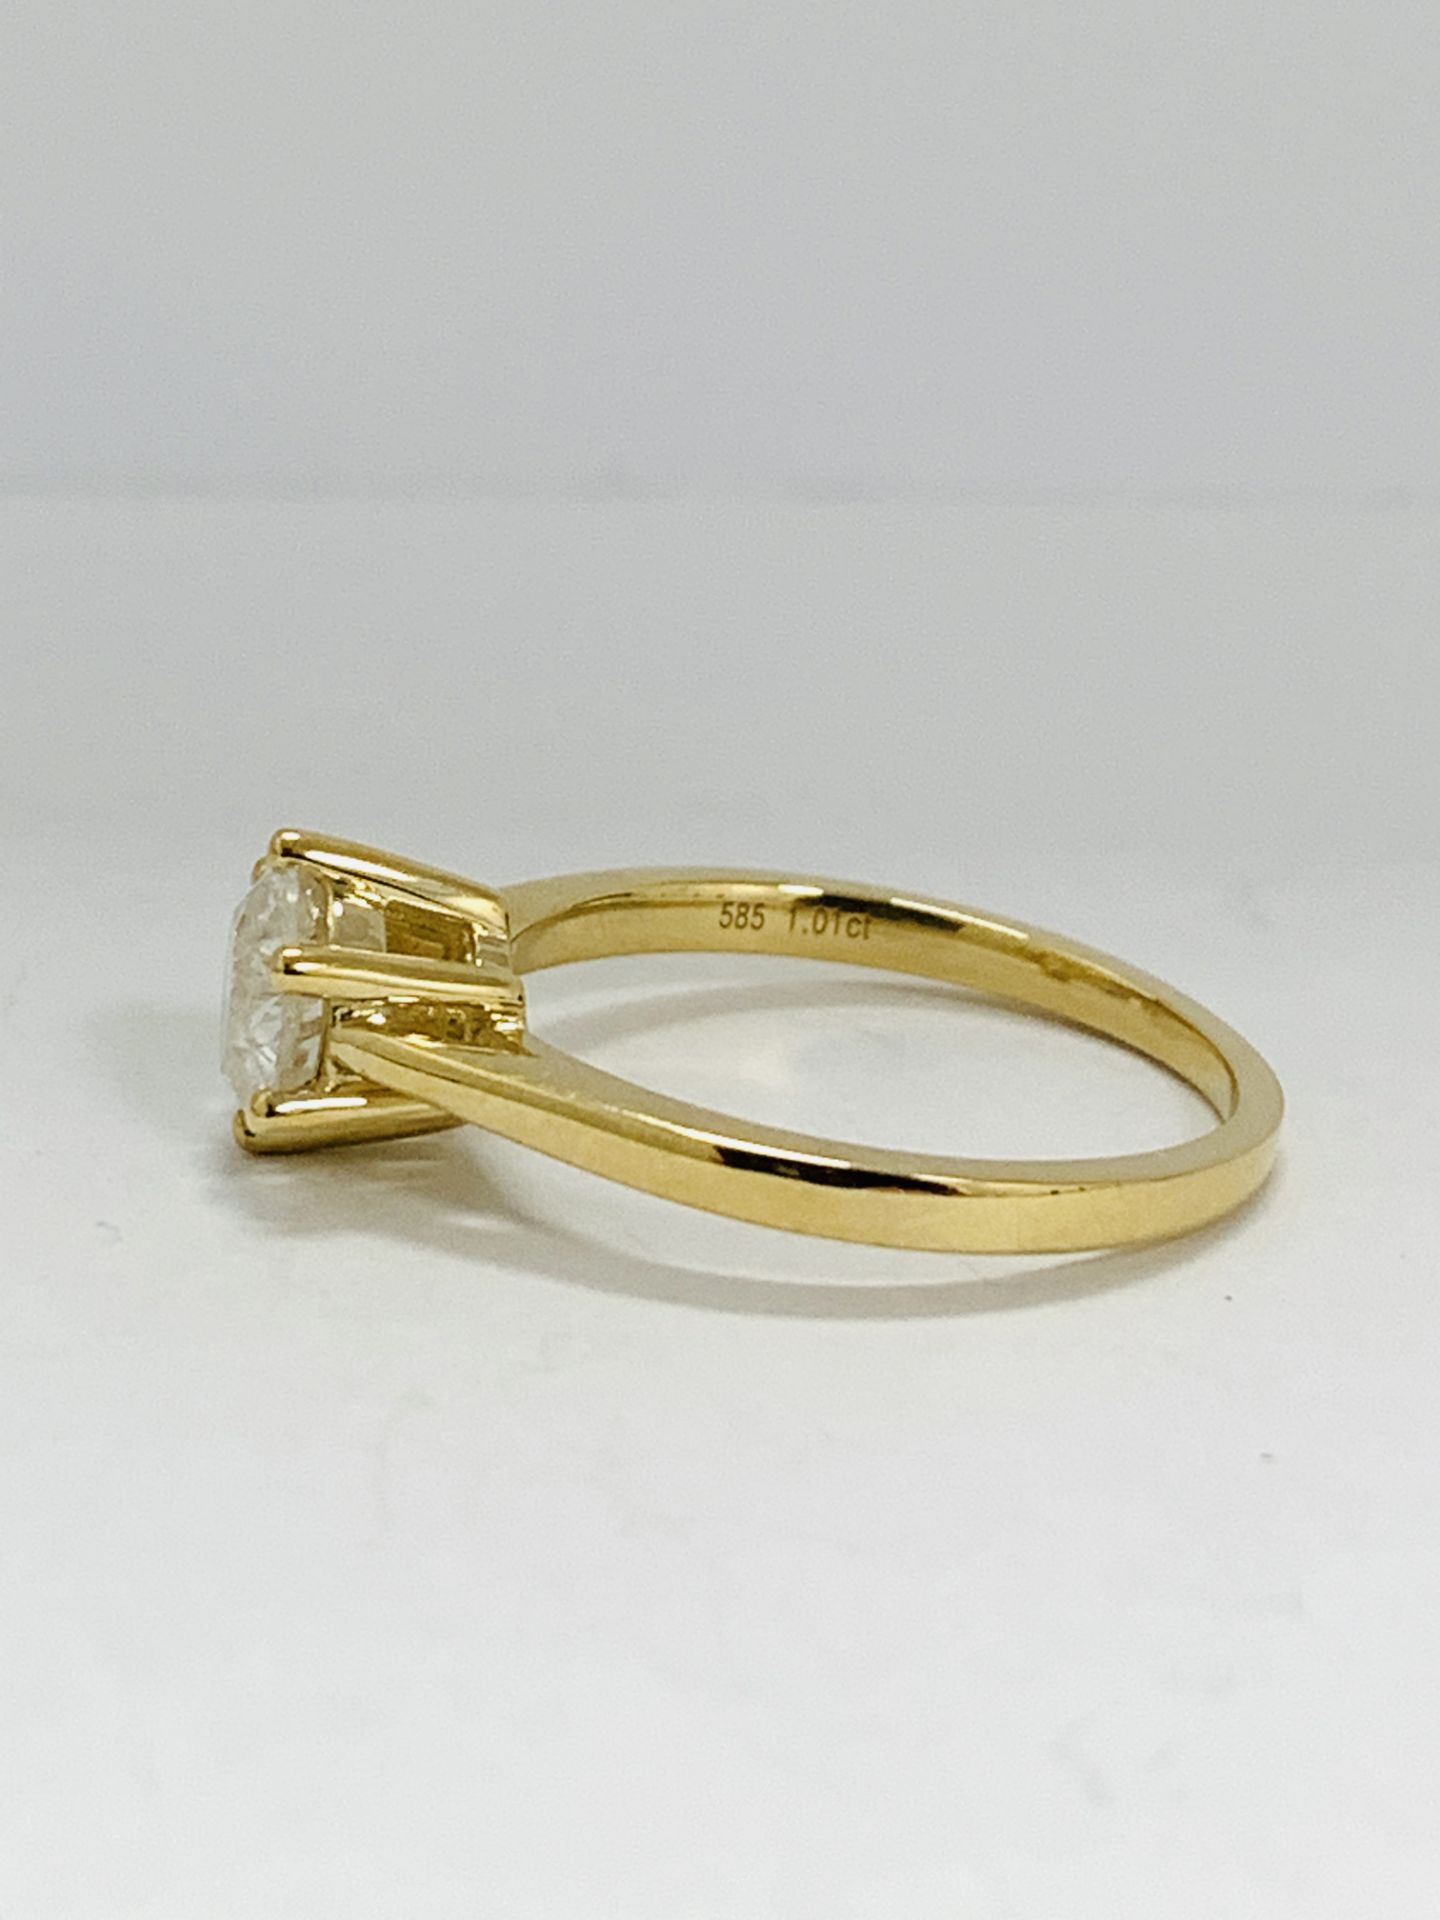 14K Yellow Gold Ring - Image 2 of 9